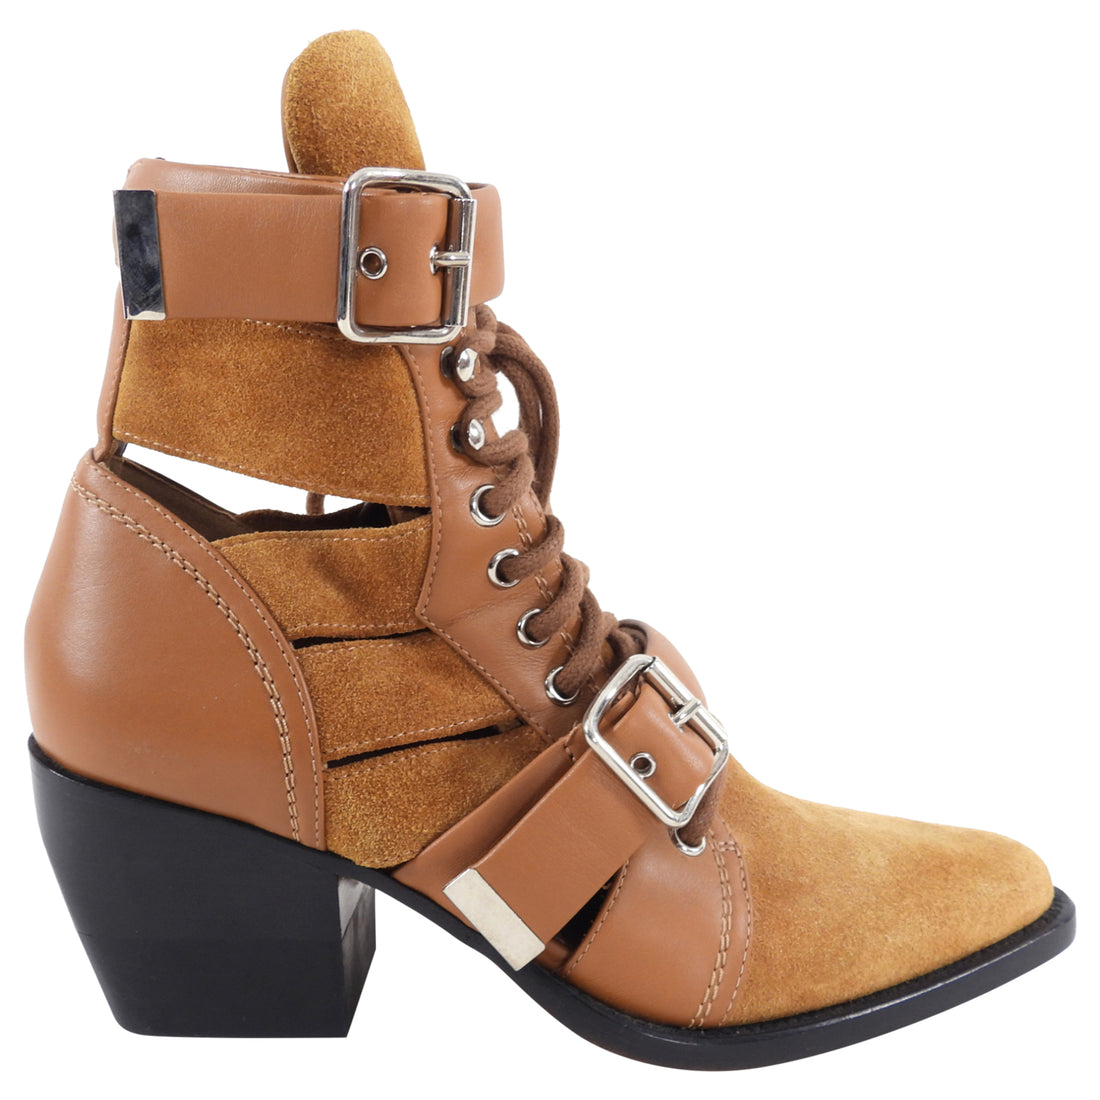 Chloe Tan Leather Rylee Boots - USA 6.5